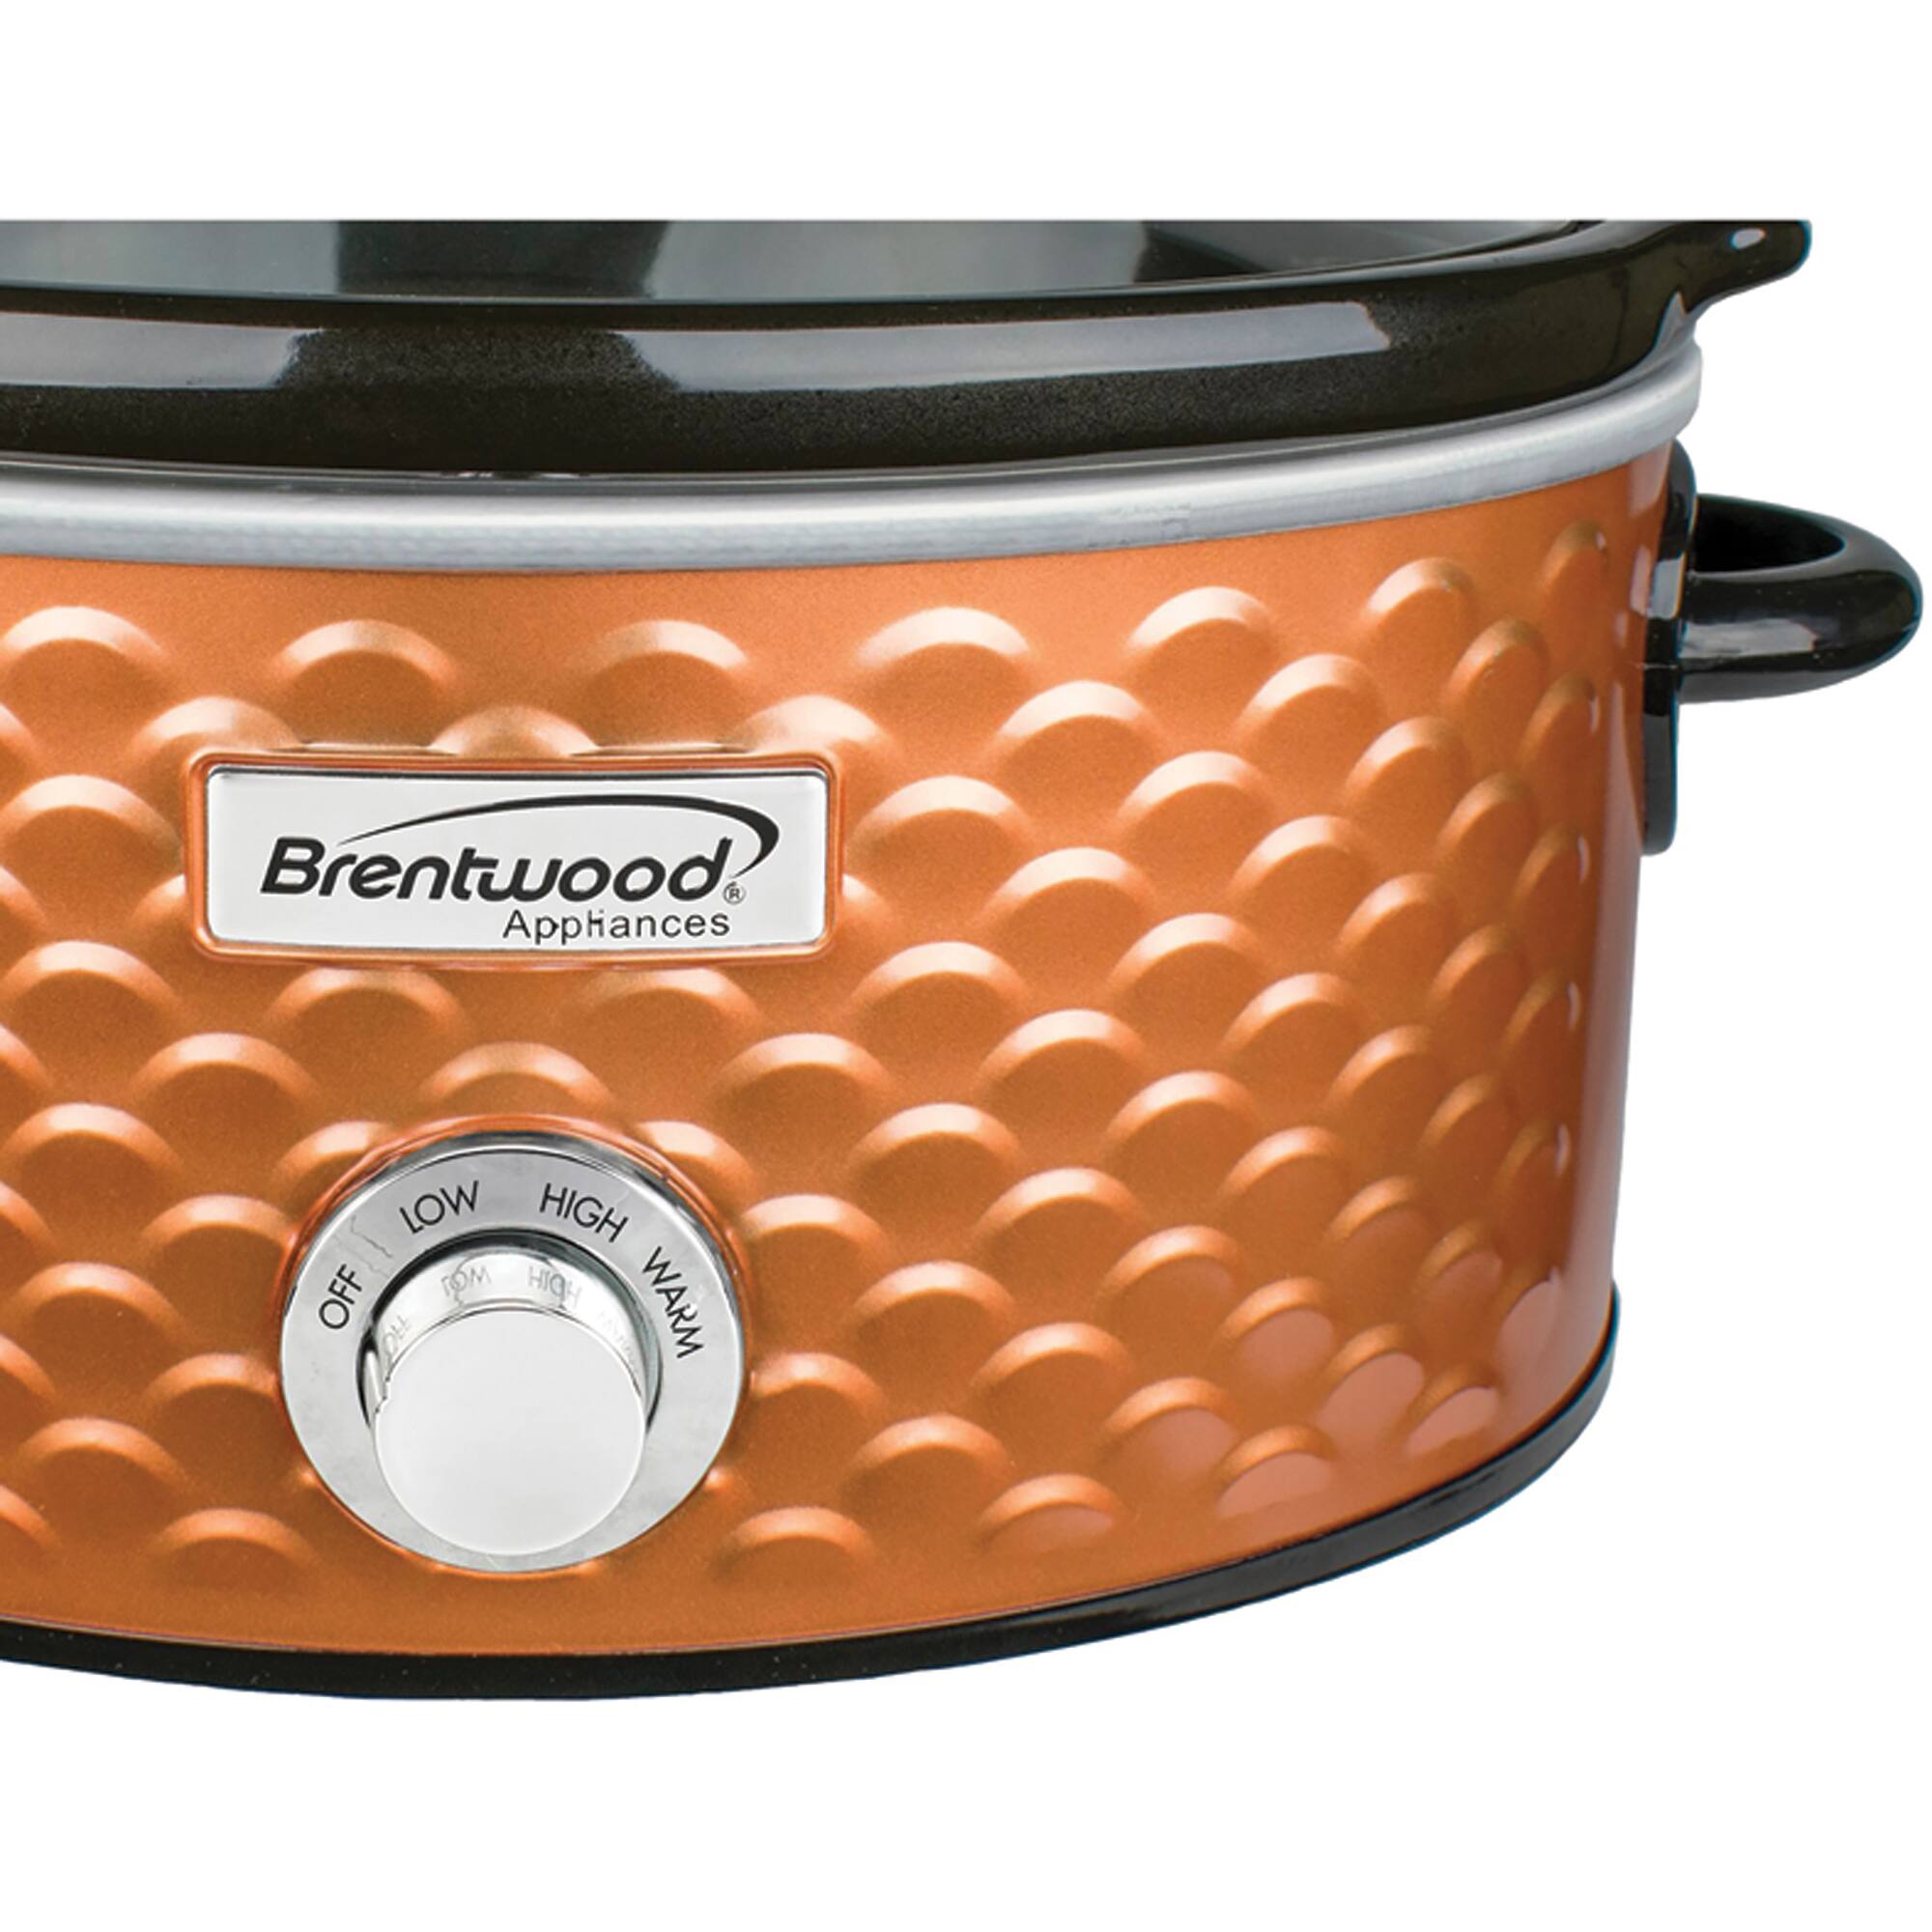 Brentwood Appliances Scallop Pattern 4.5qt. Slower Cooker (Copper